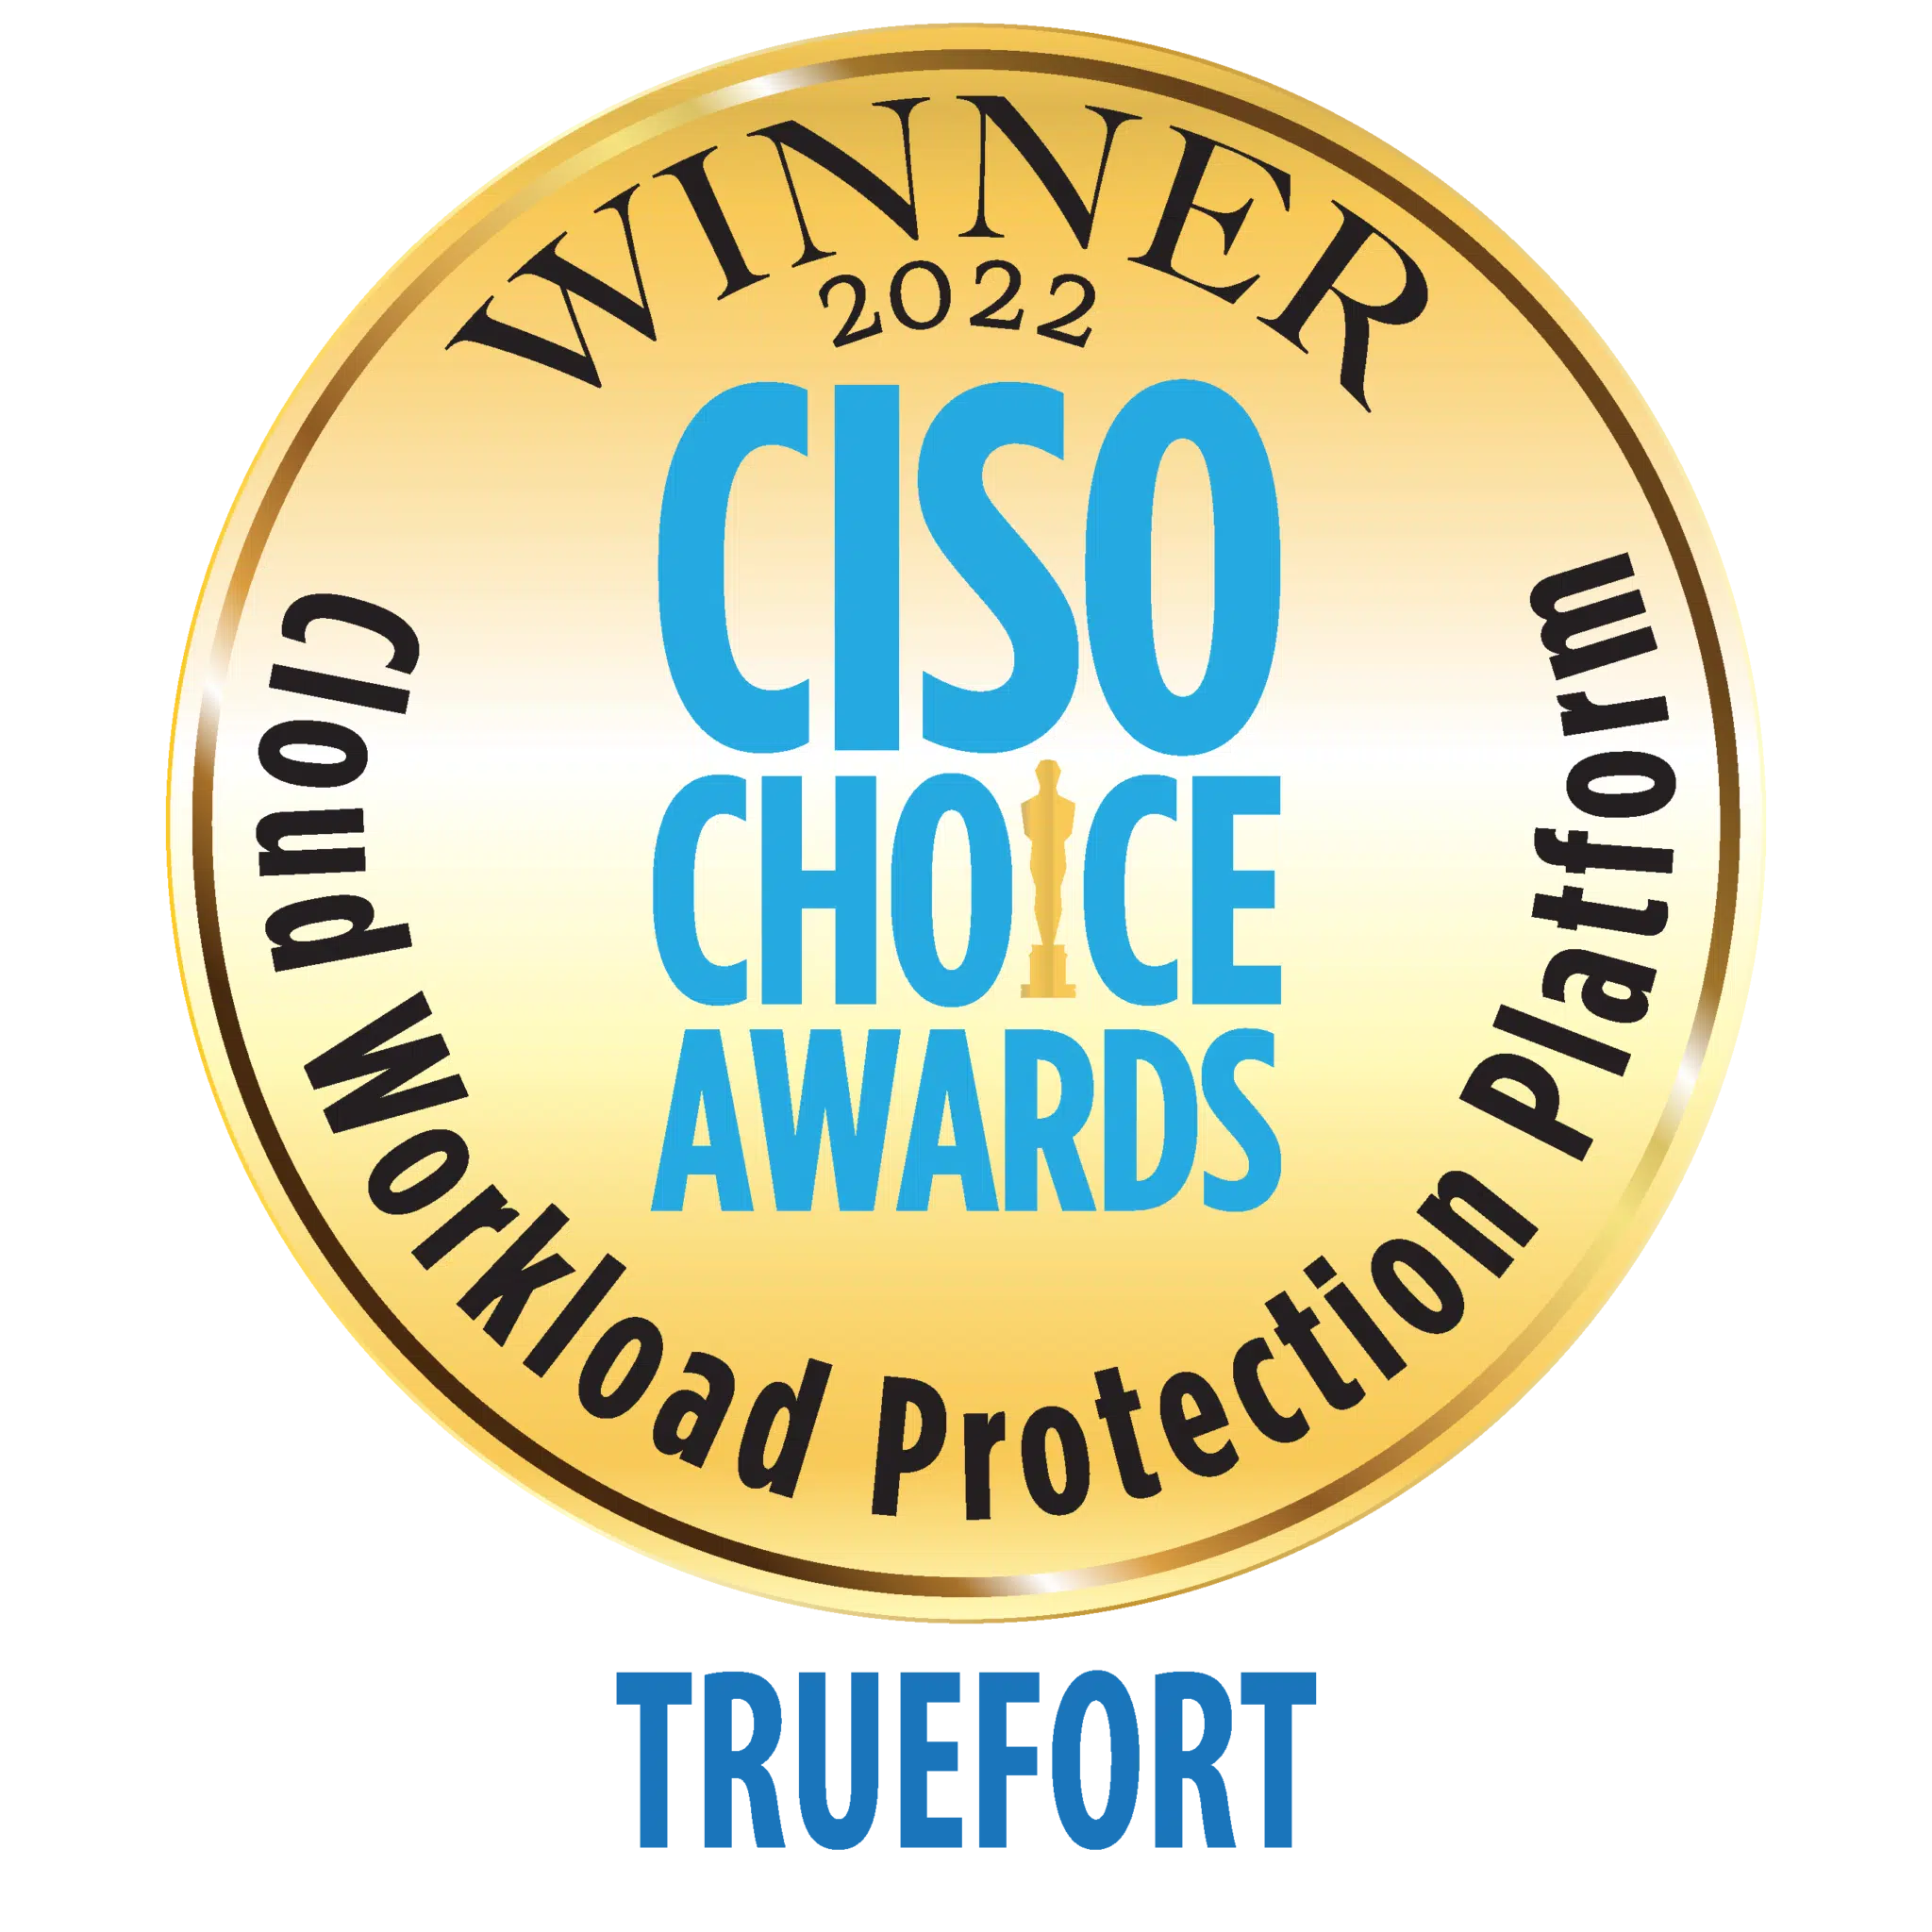 TrueFort-Cloud-Workload-Protection-Platform-CISO-Choice-Awards-2022-2048x2048-1